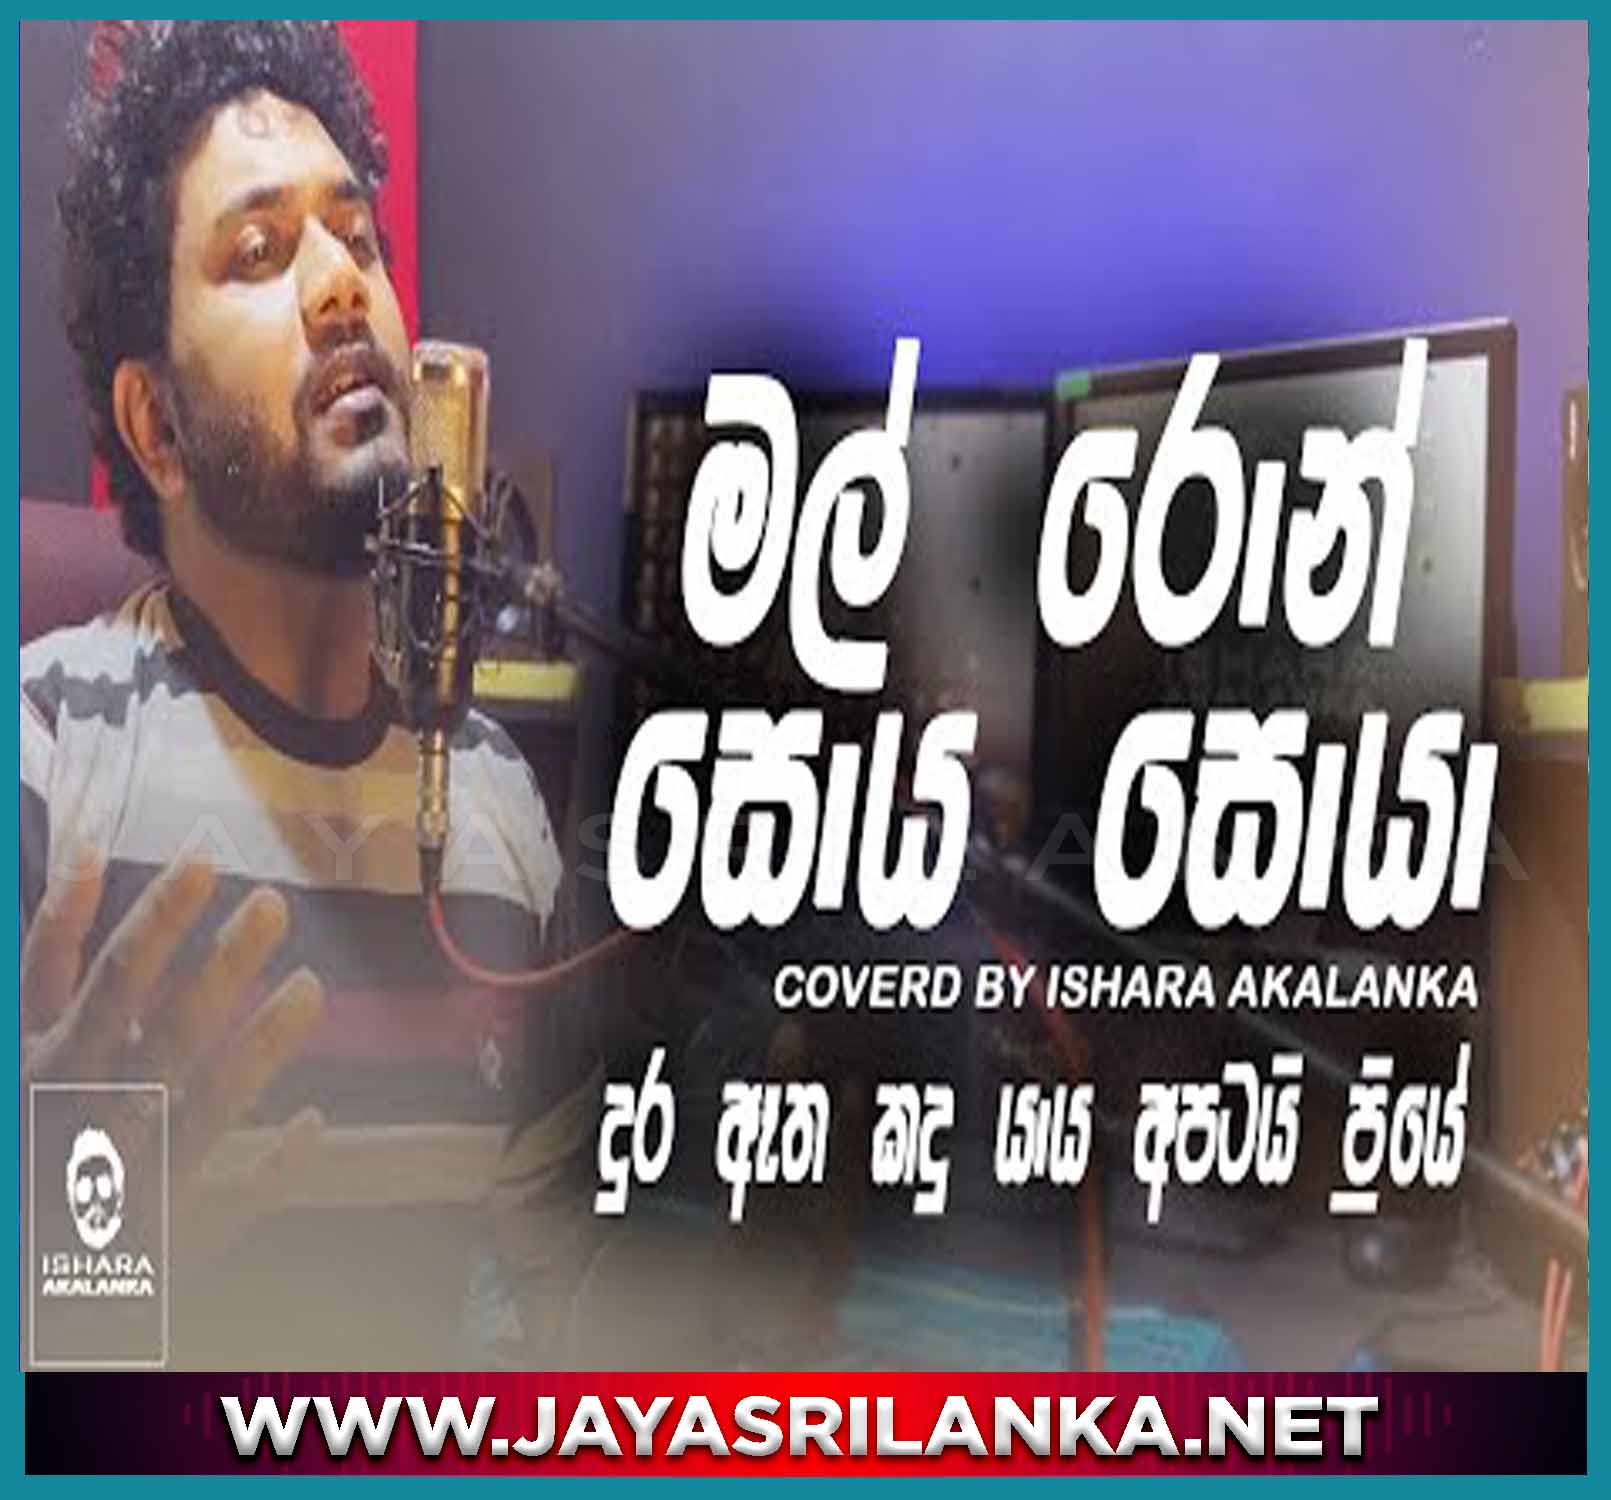 jayasrilanka ~ Dura Atha Kadu Yaya Apatai Priye (Mal Ron Soya Soya) Cover - Ishara Akalanka